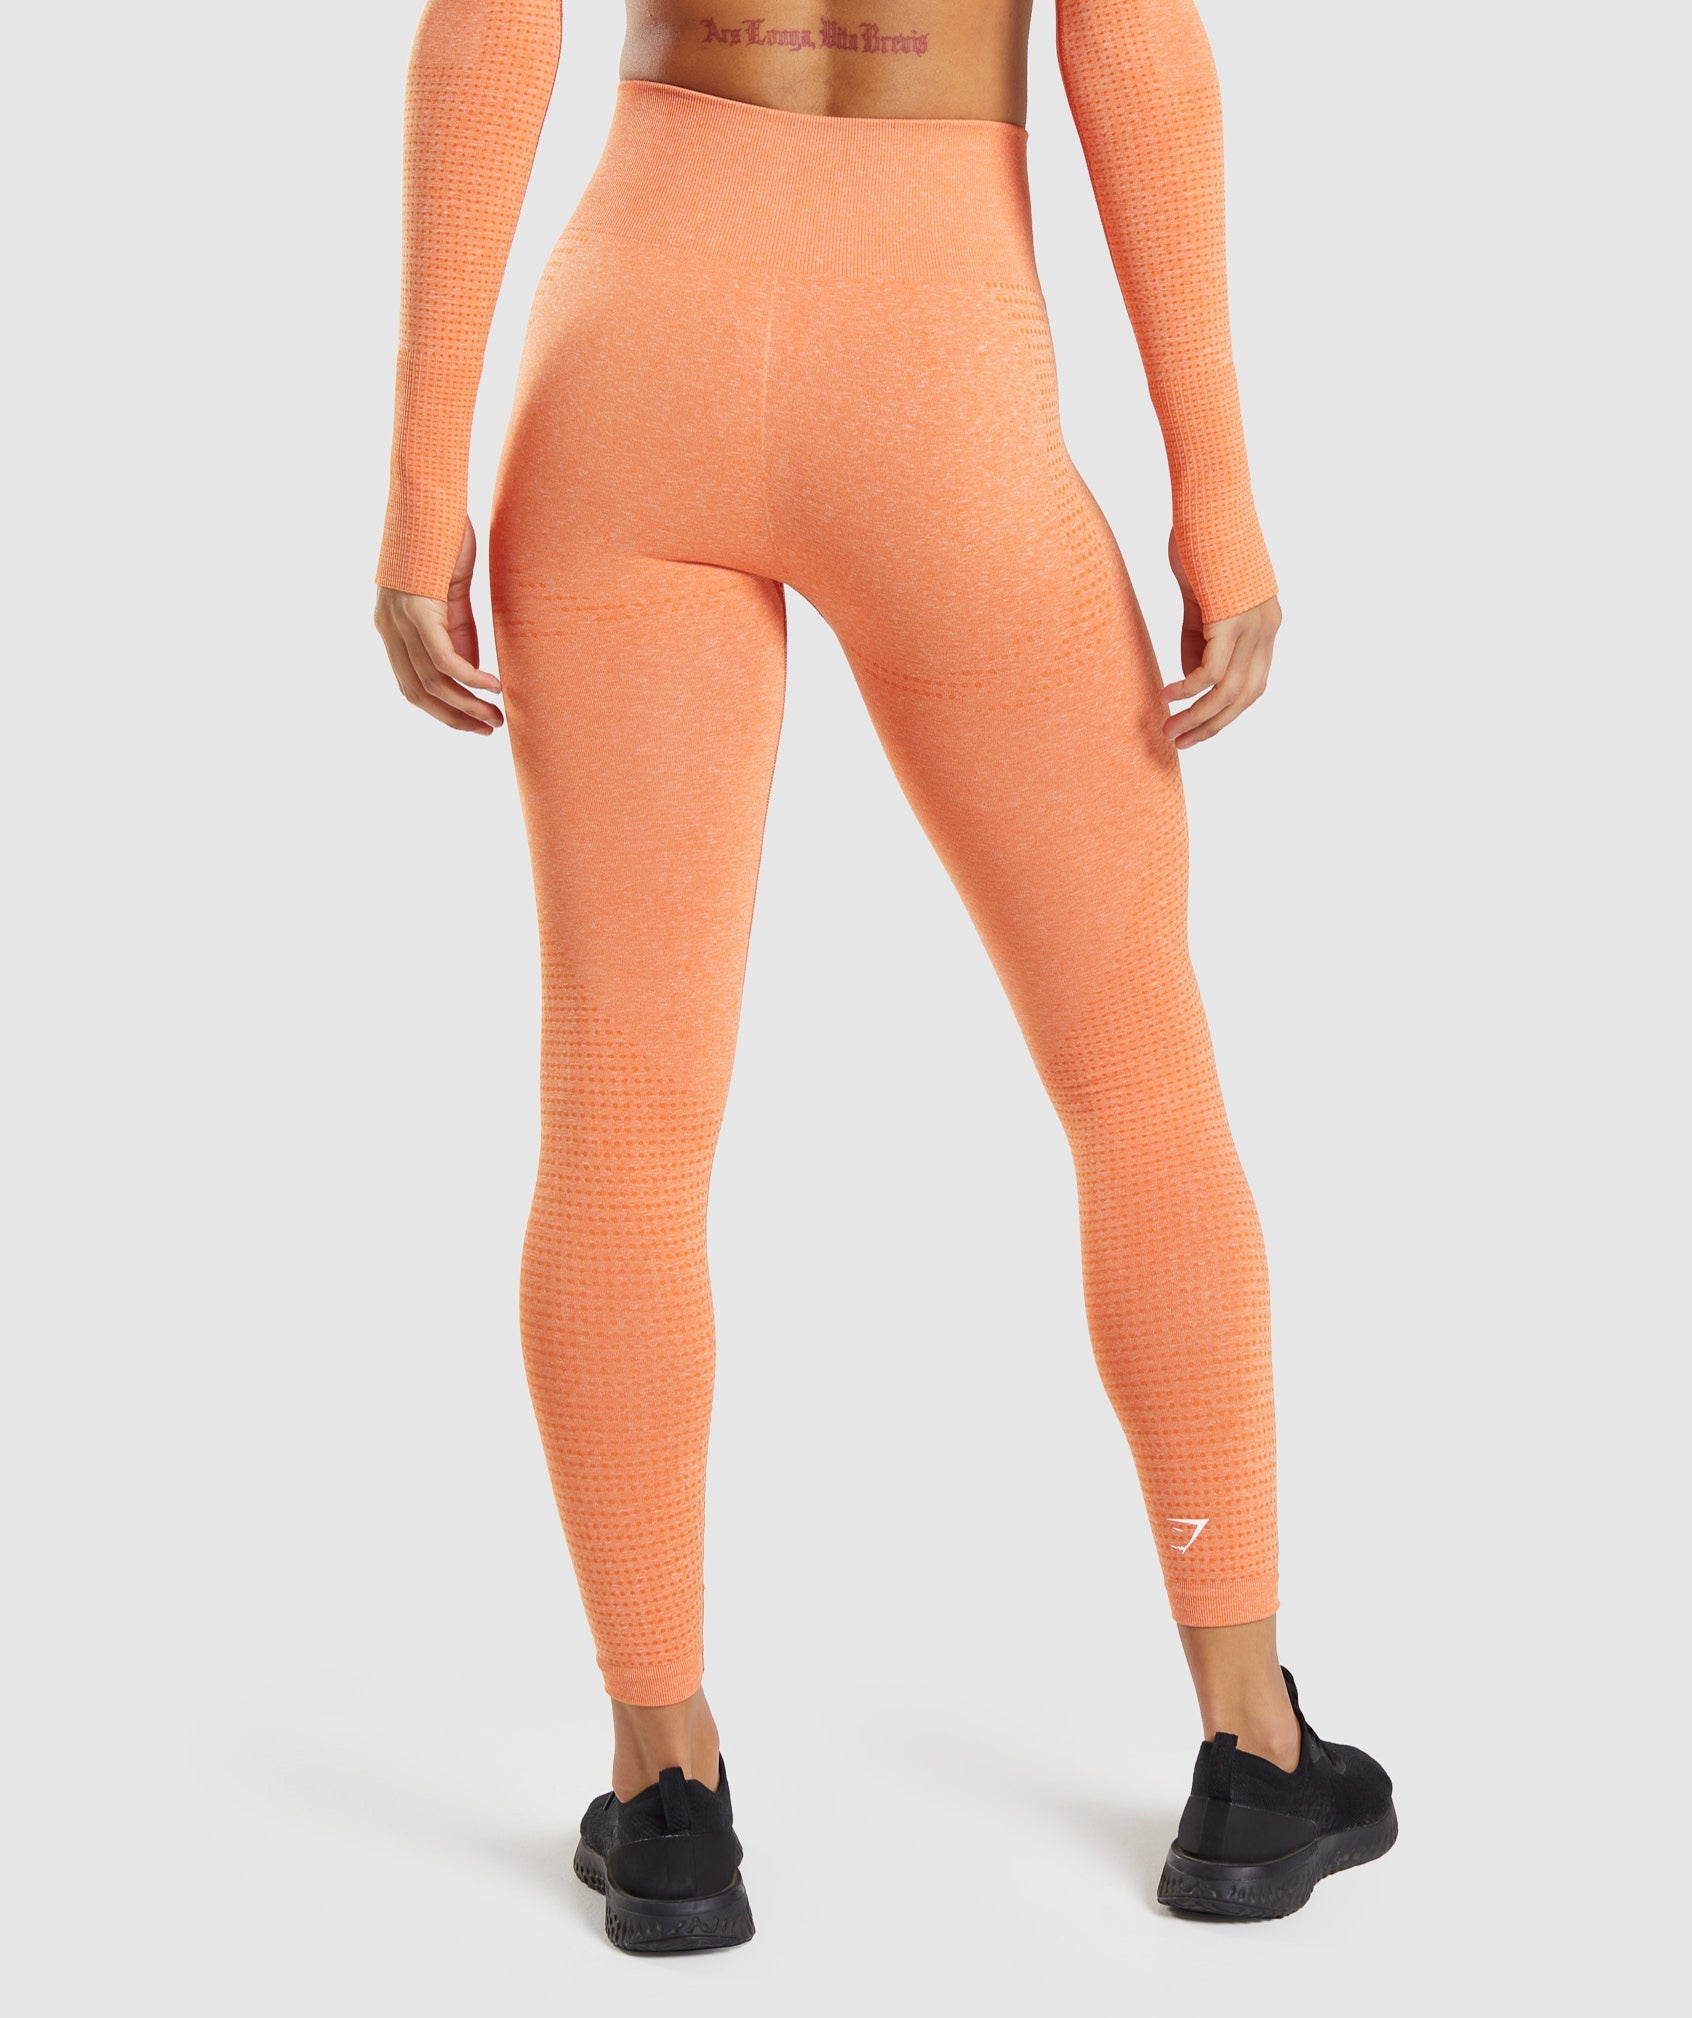 Gymshark Flawless Knit burnt orange seamless leggings size medium